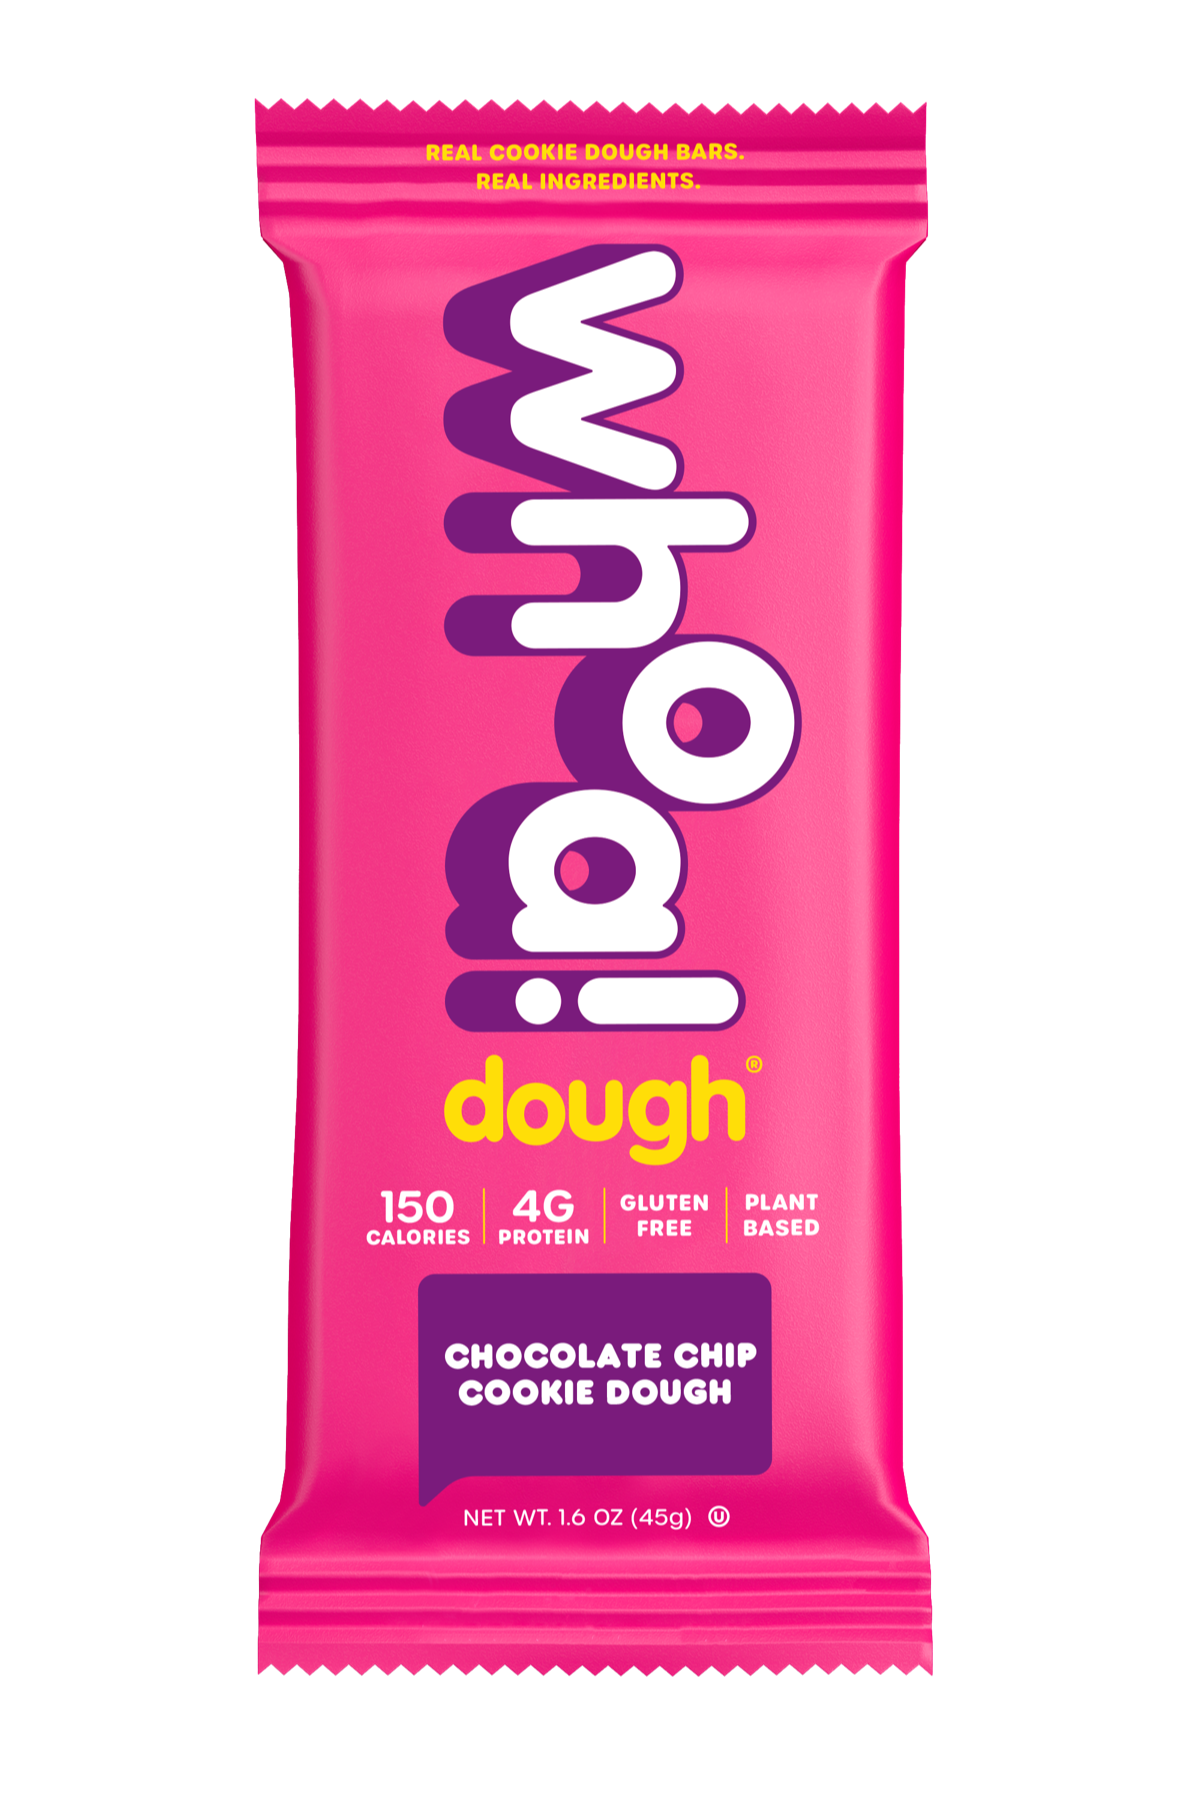 Whoa Dough wholesale products